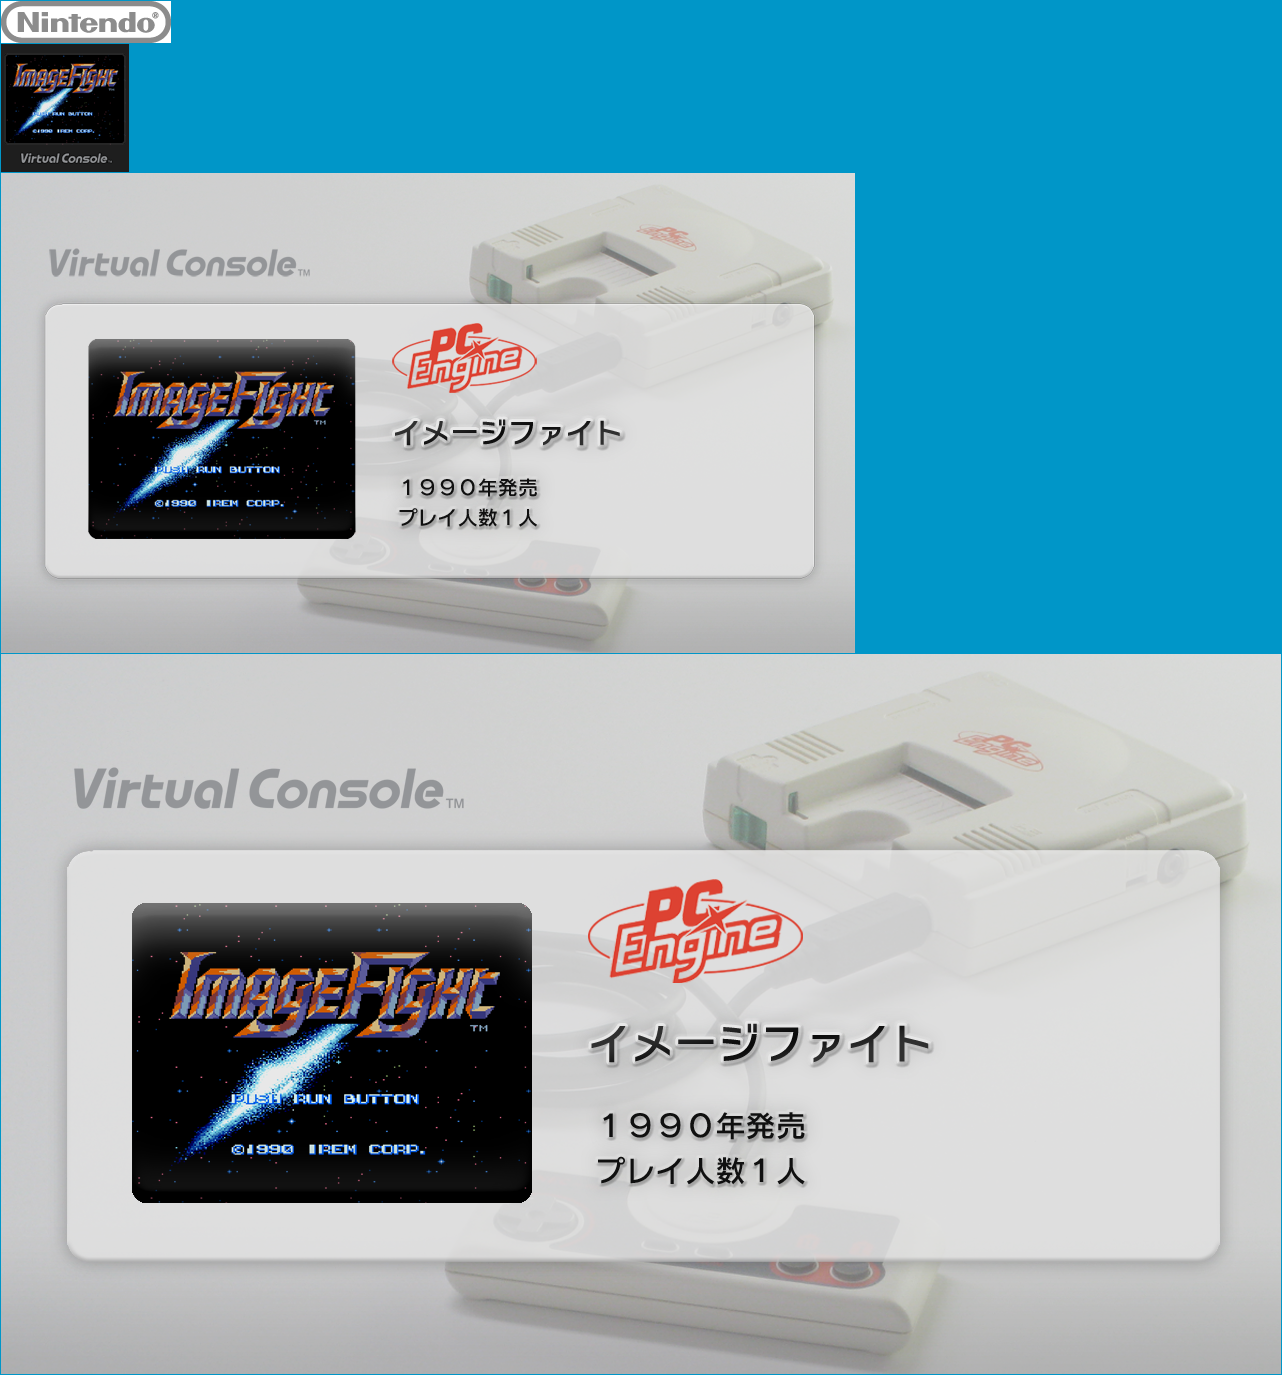 Virtual Console - Image Fight